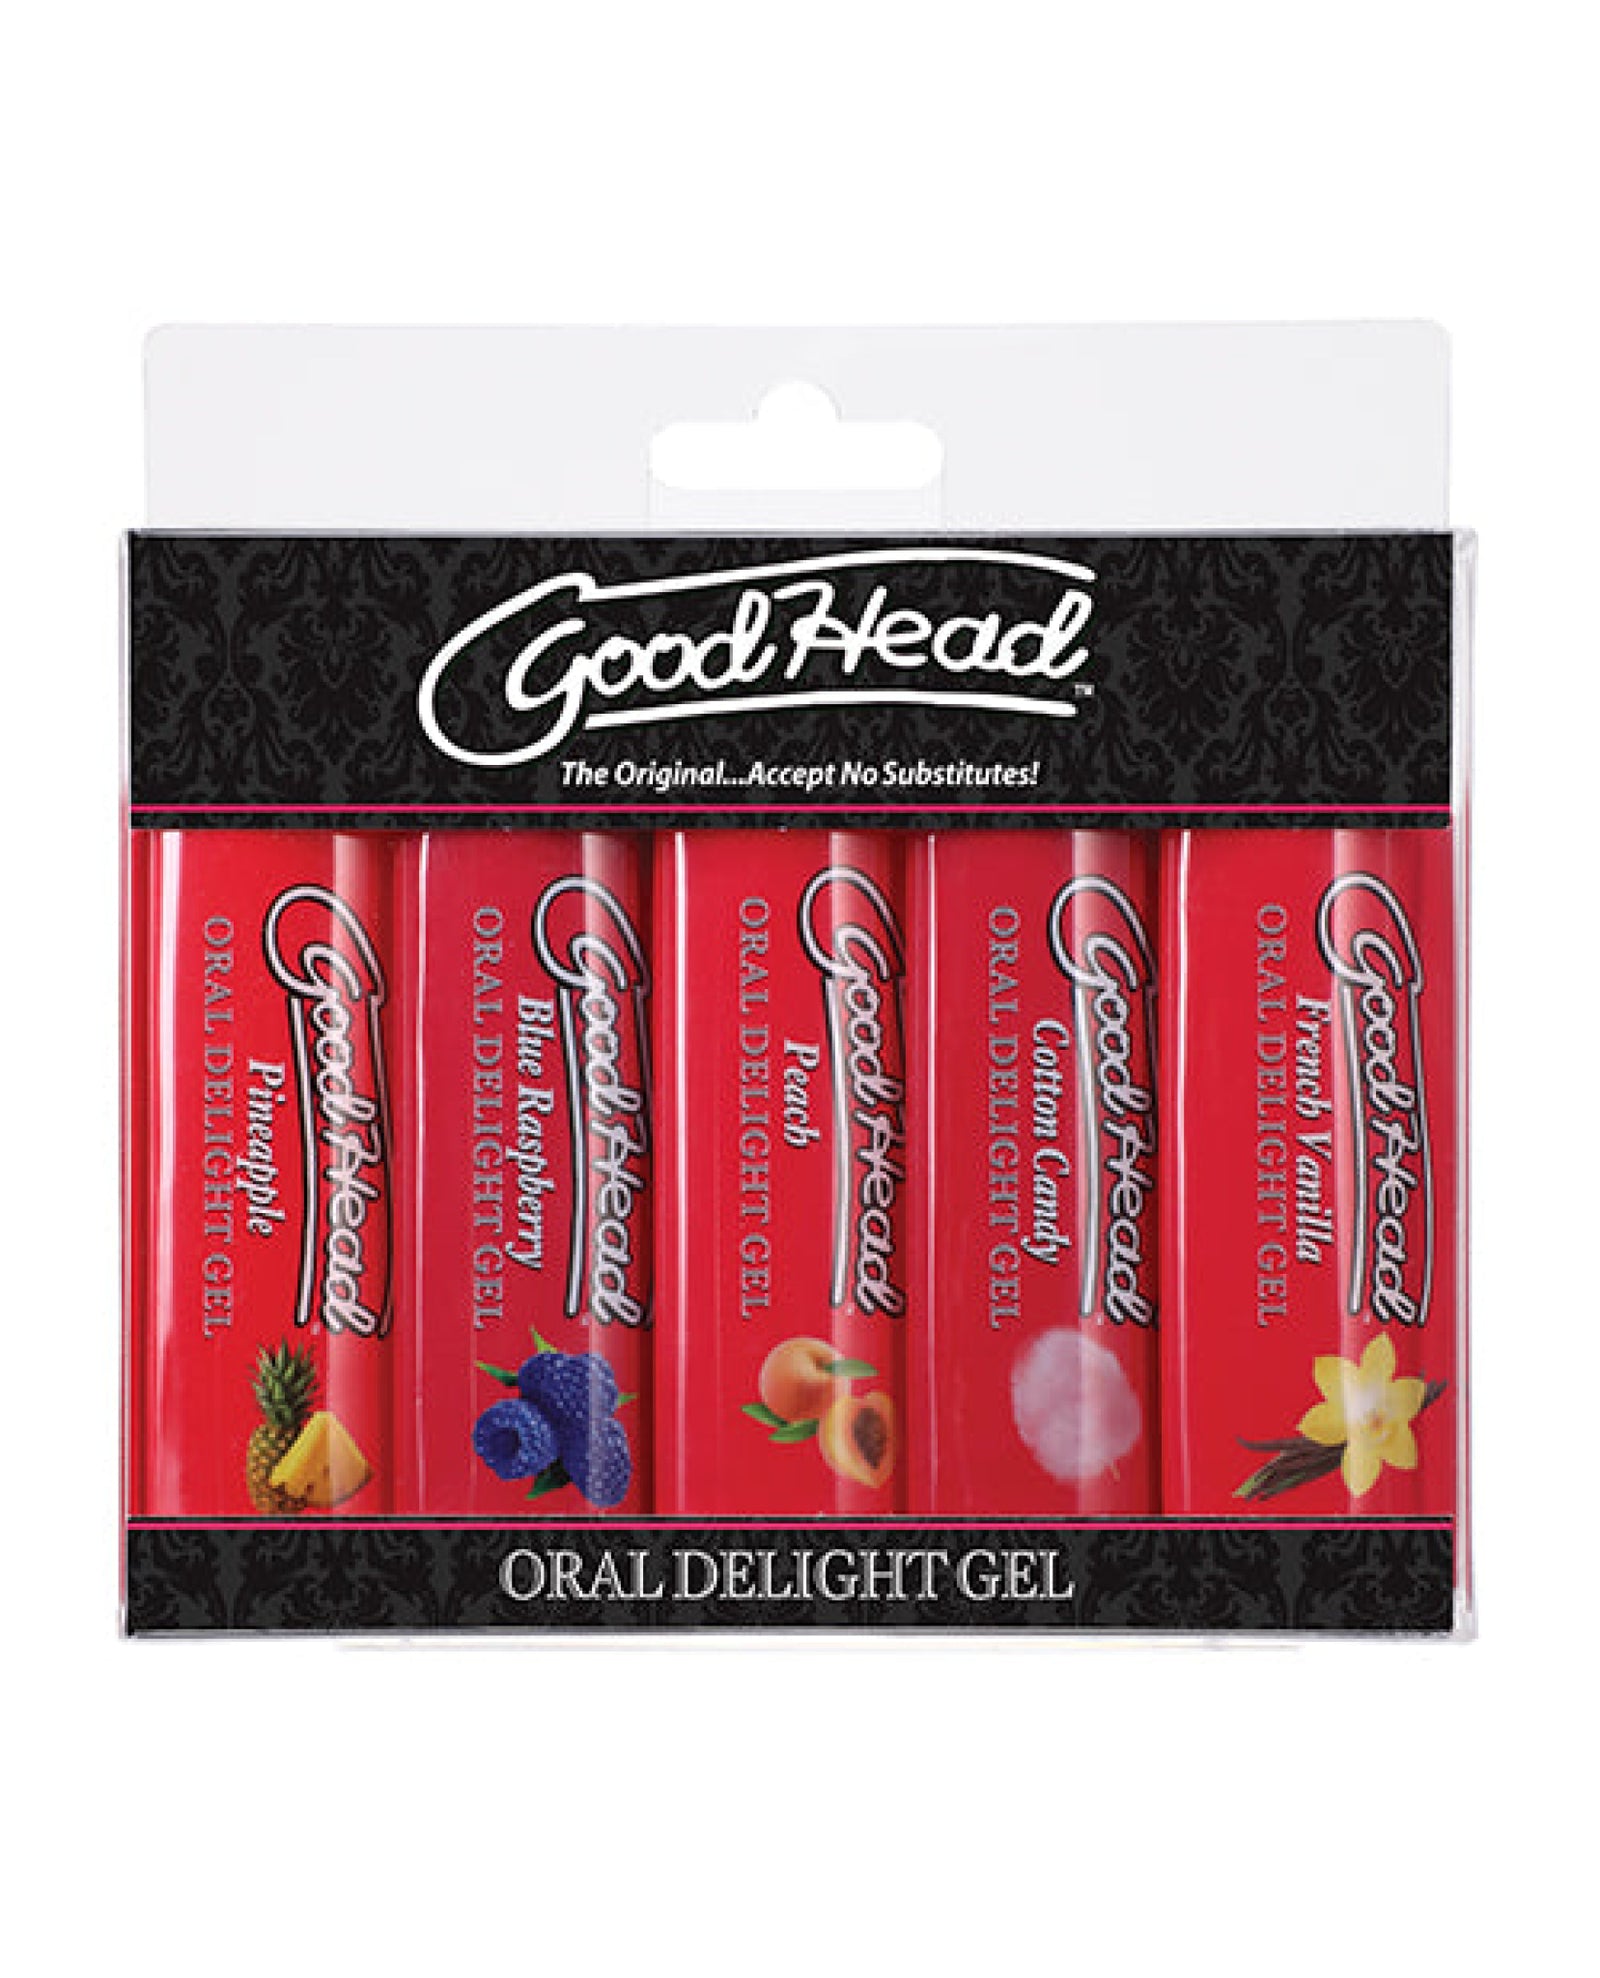 Goodhead Oral Delight Gel - 1 Oz Asst. Flavors Pack Of 5 Doc Johnson